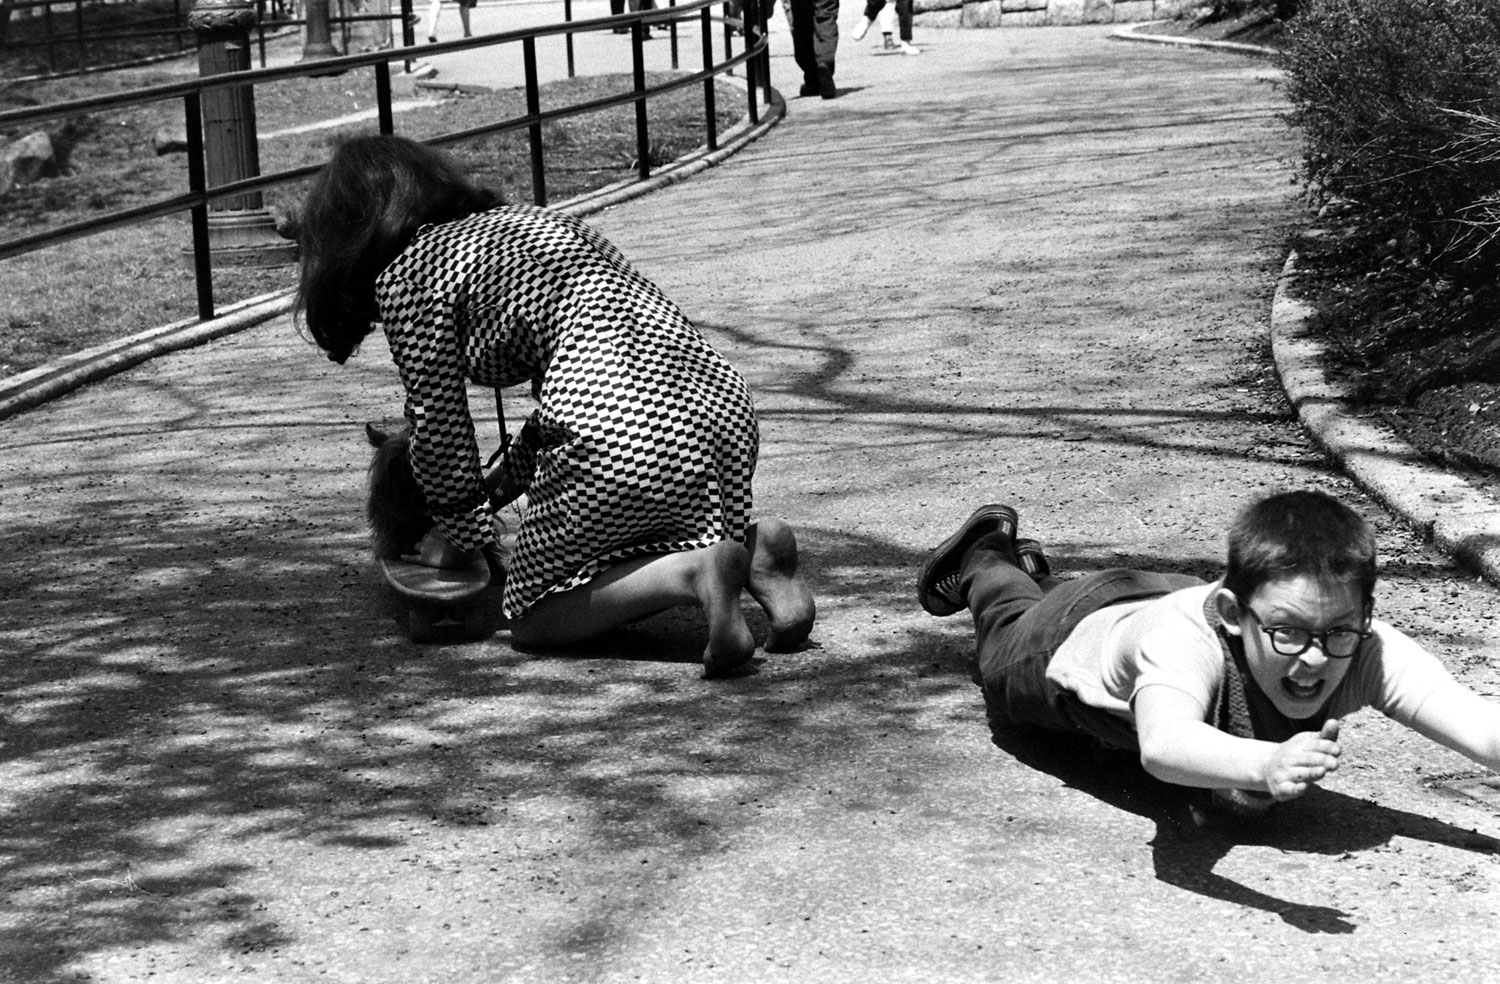 Skateboarding in New York City, 1965